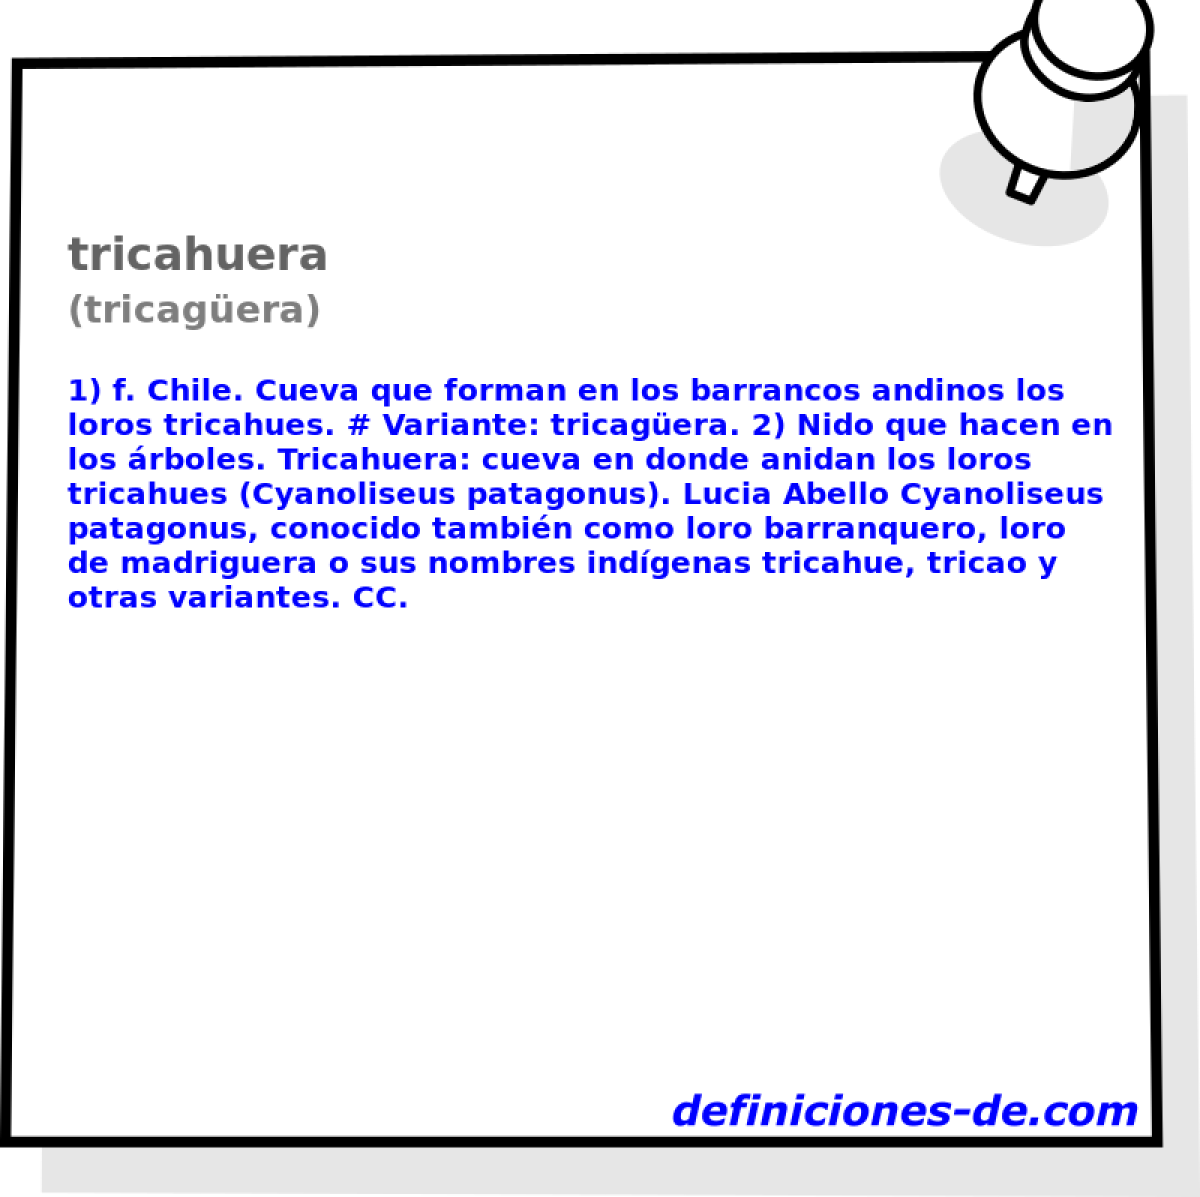 tricahuera (tricagera)